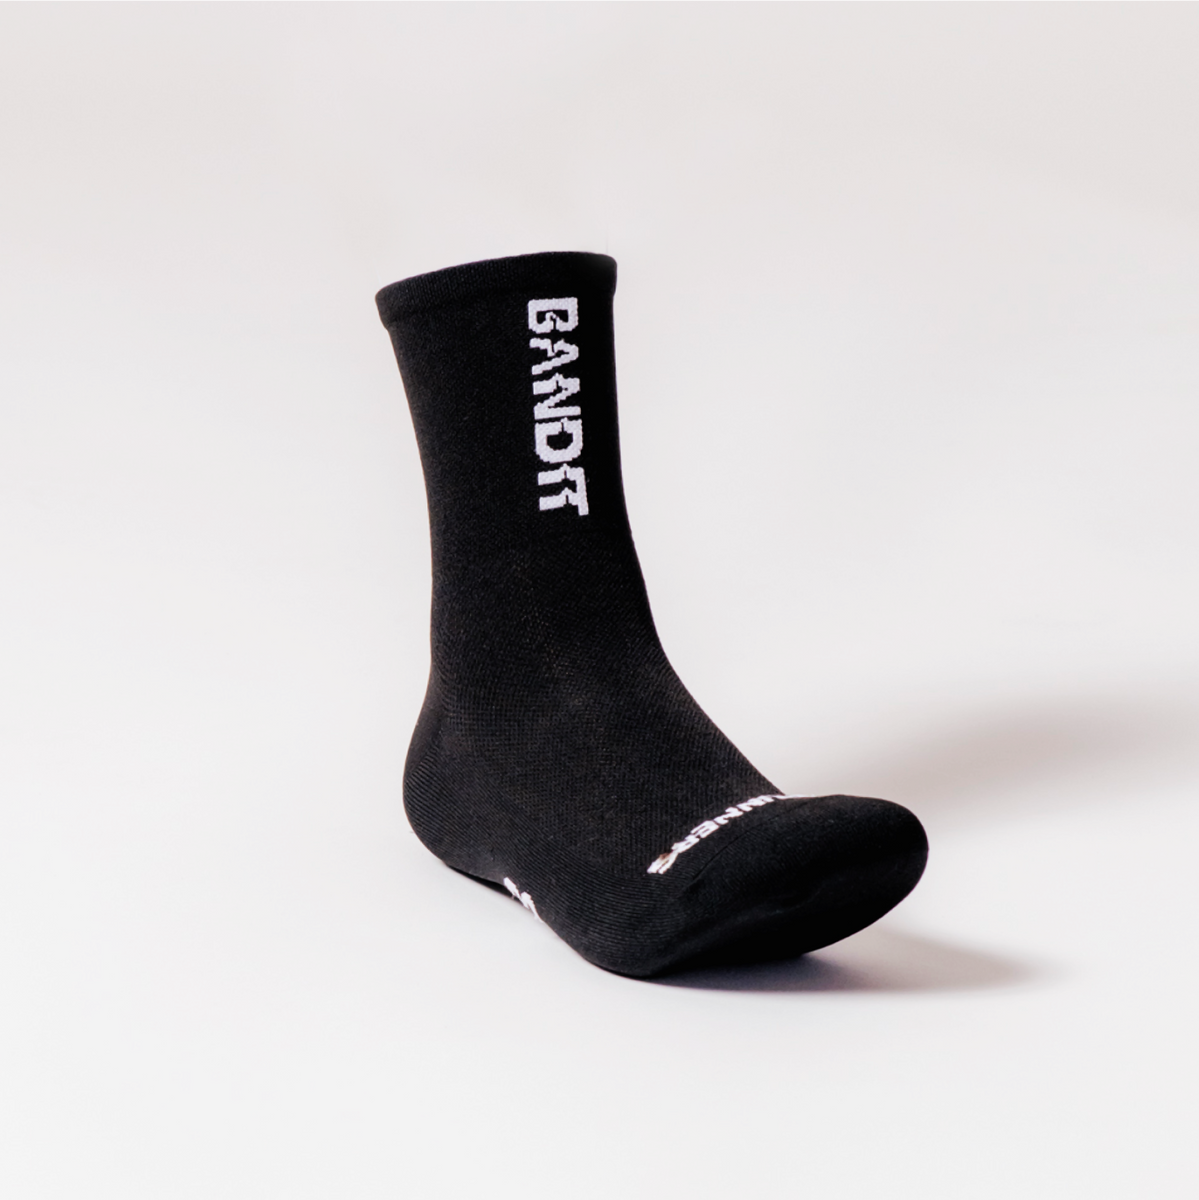 Lite Run Quarter Socks - Warped Bandit - Black with White - 2 Pack